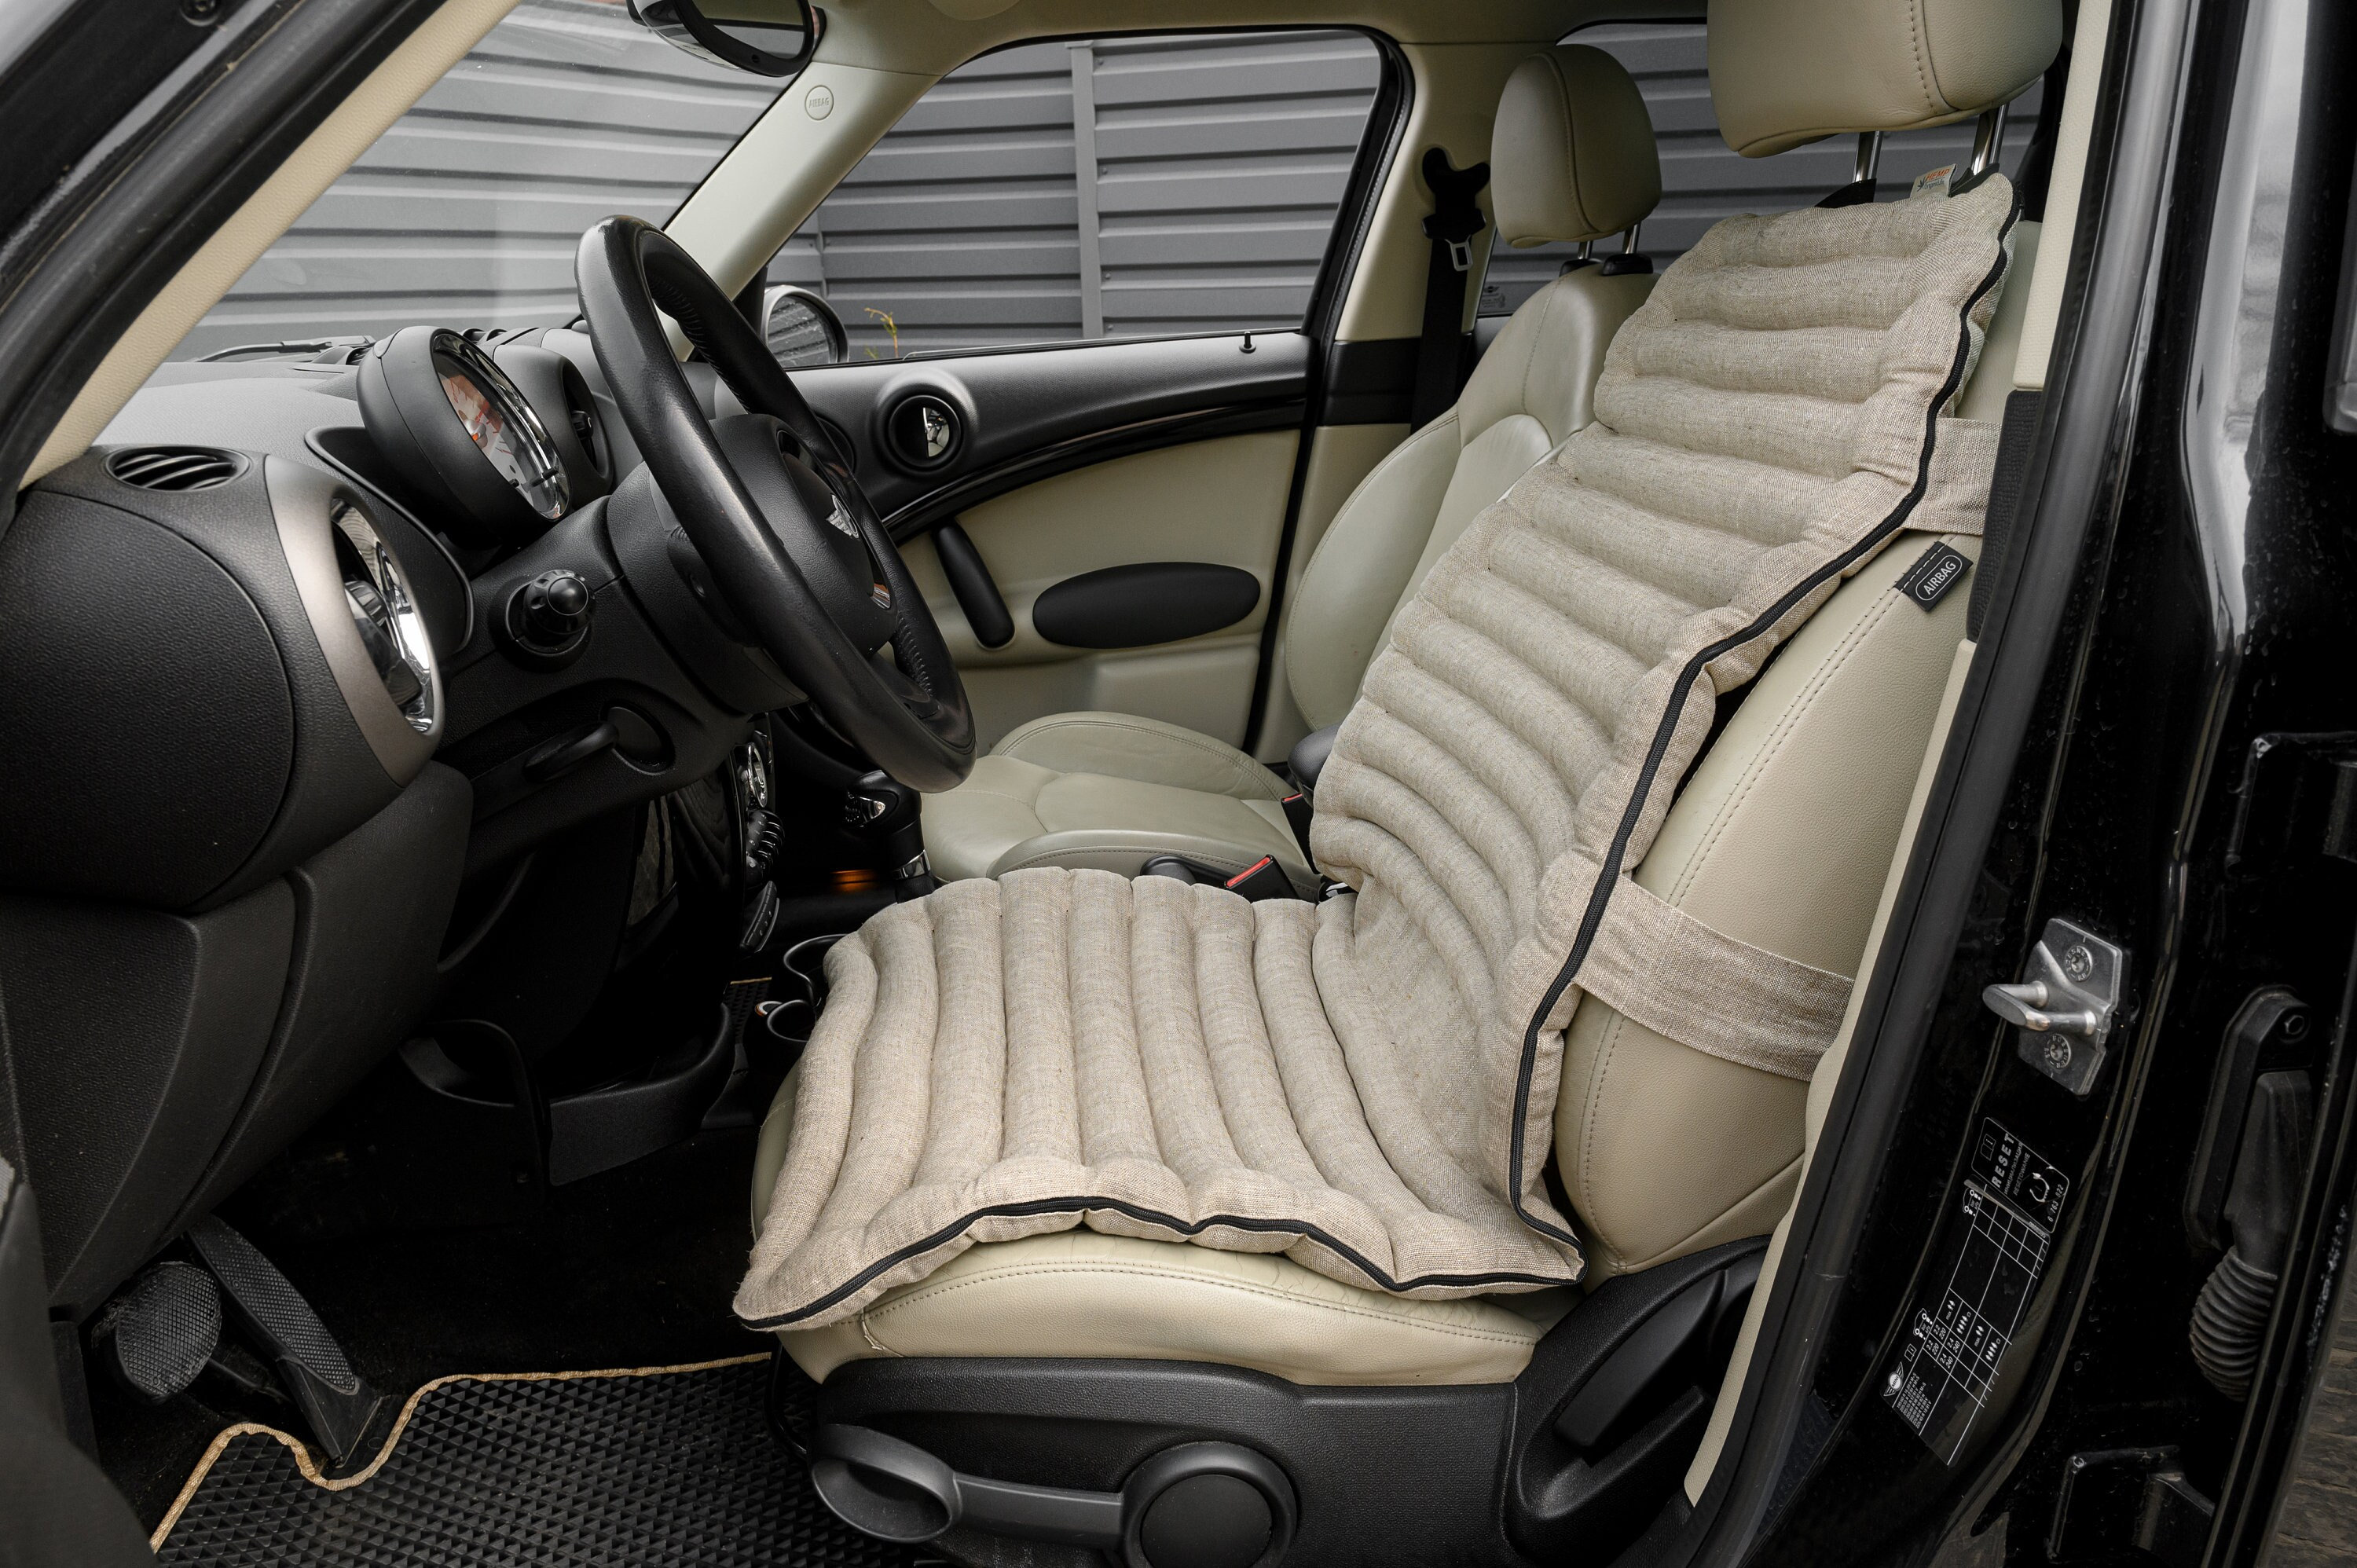 Organic Car Seat Cover Filling Buckwheat Hulls/massage Orthopedic